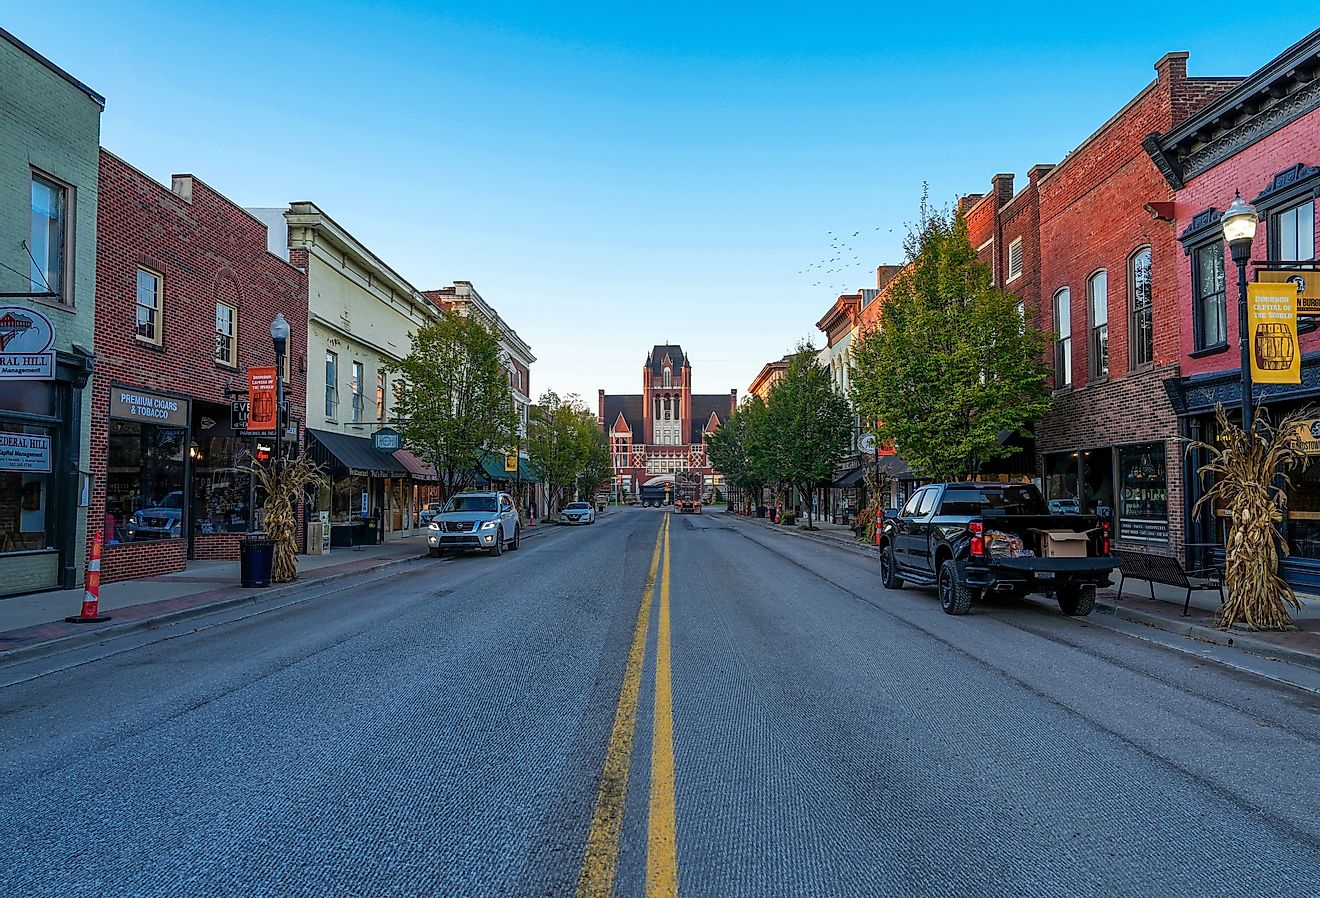 Brick buildings along the main street in Bardstown, Kentucky. Image credit Jason Busa via Shutterstock